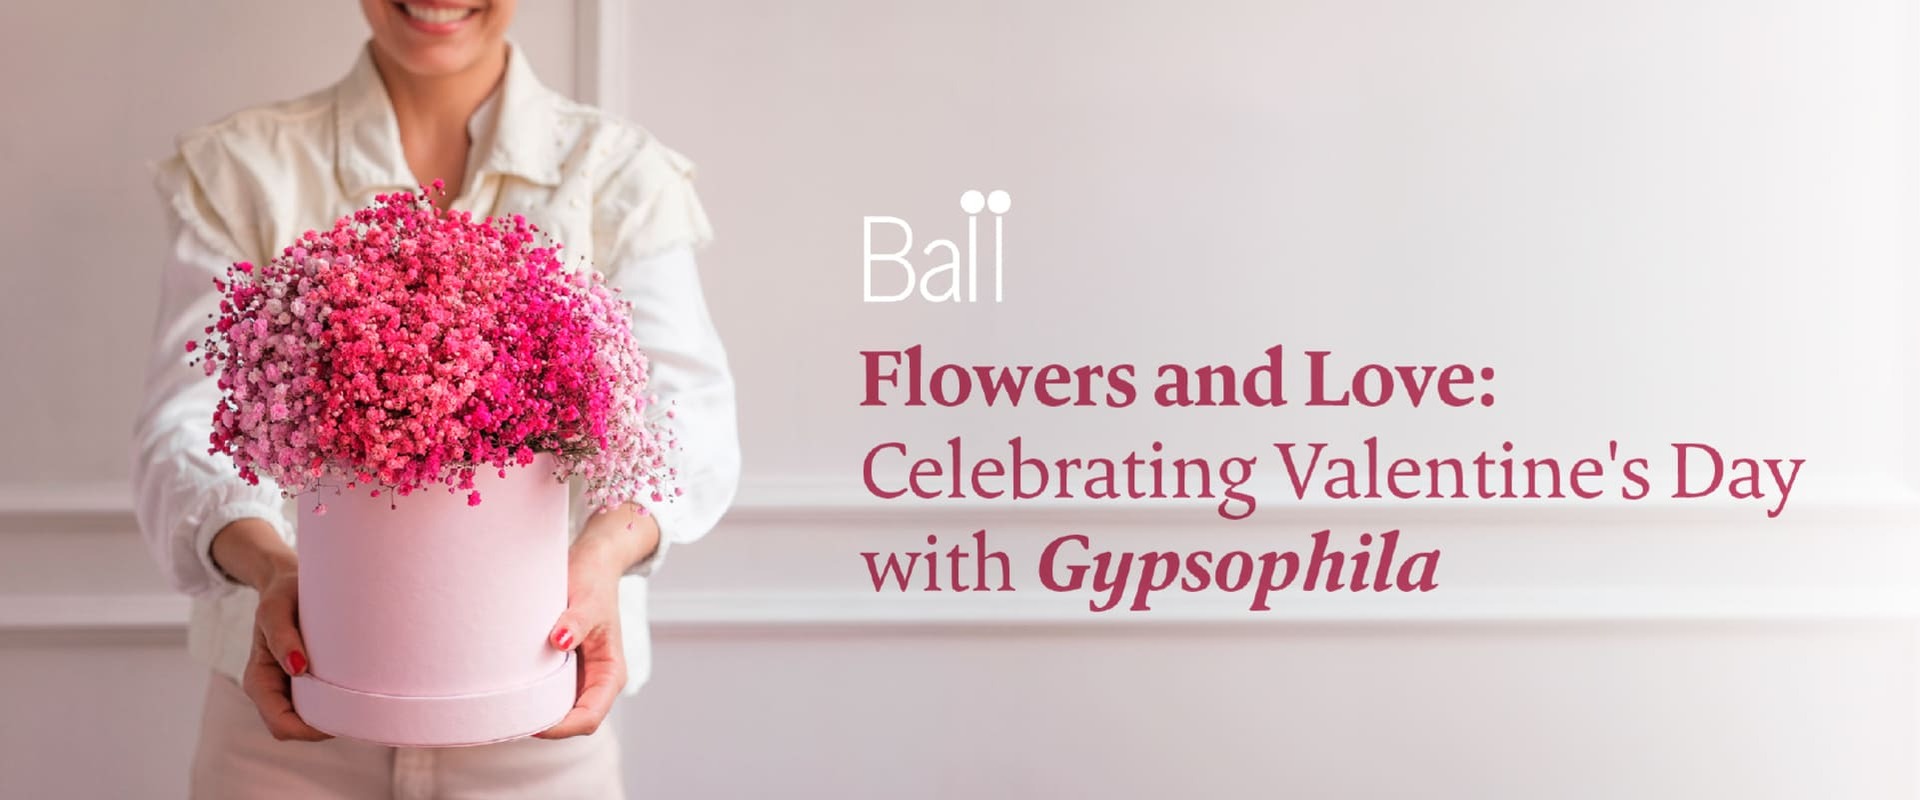 Flowers and Love: Celebrating Valentine's Day with Gypsophila